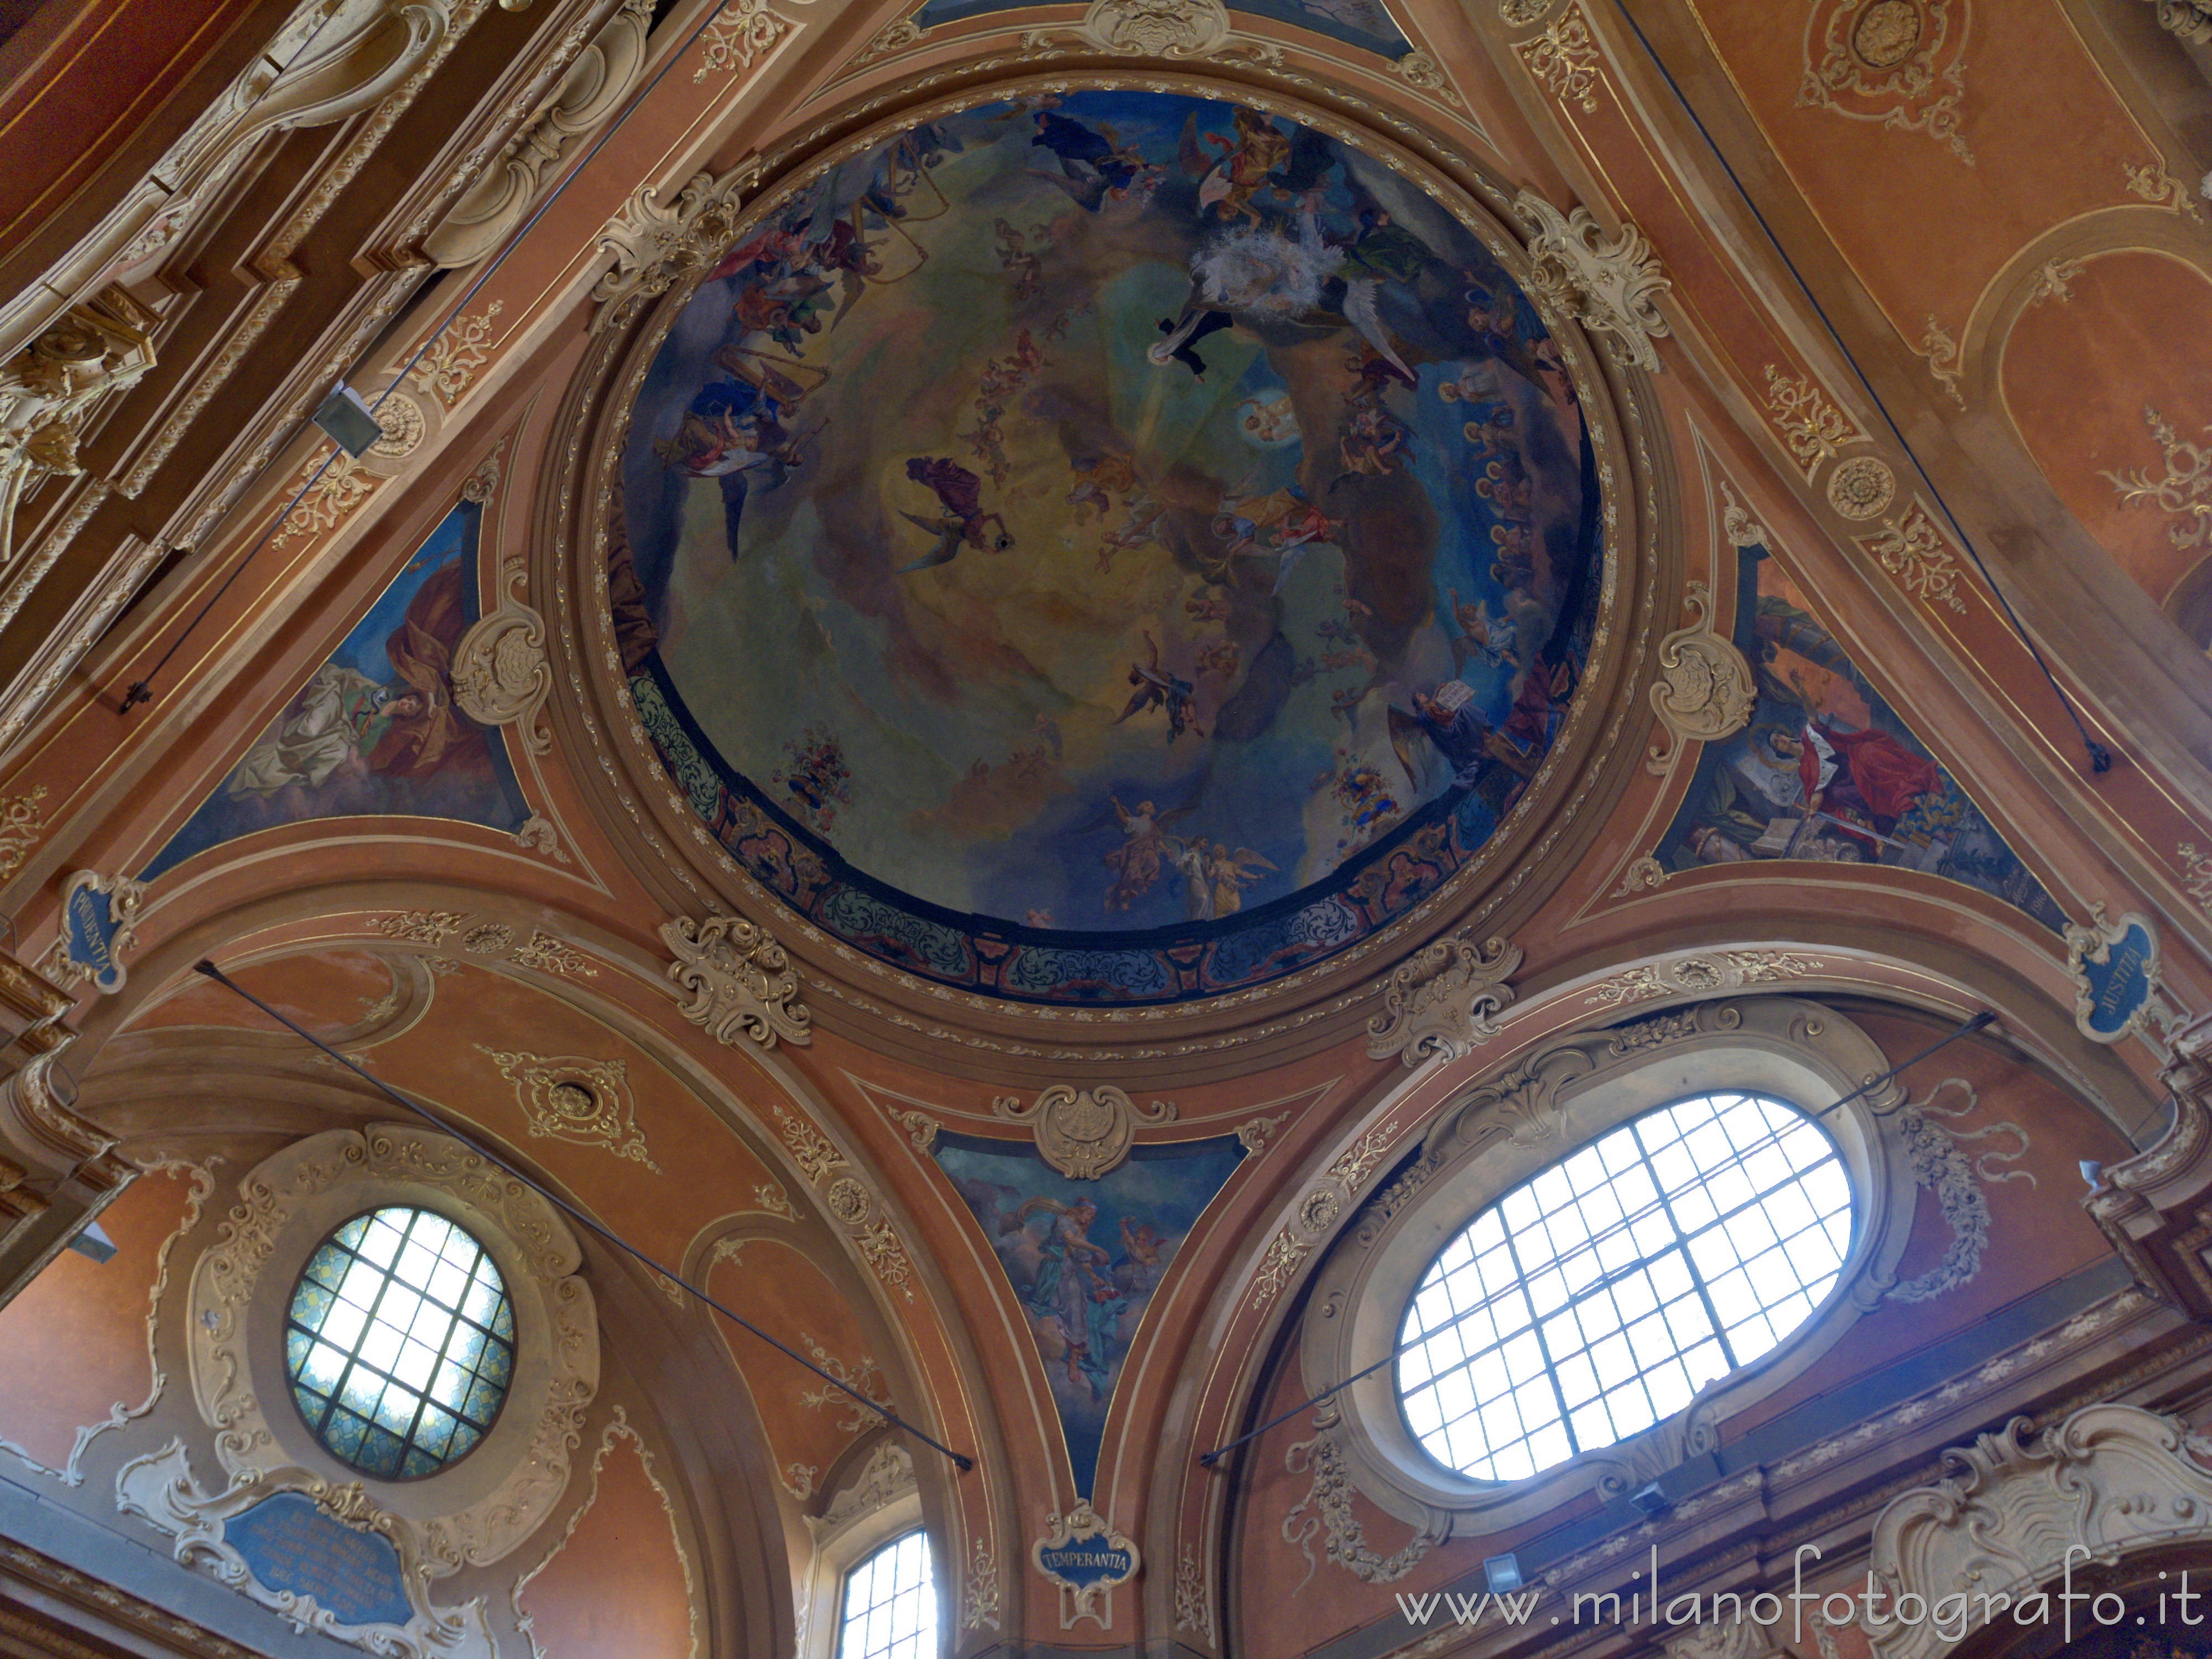 Milan (Italy): Decorated ceiling above the entrance of the Church of Santa Francesca Romana - Milan (Italy)